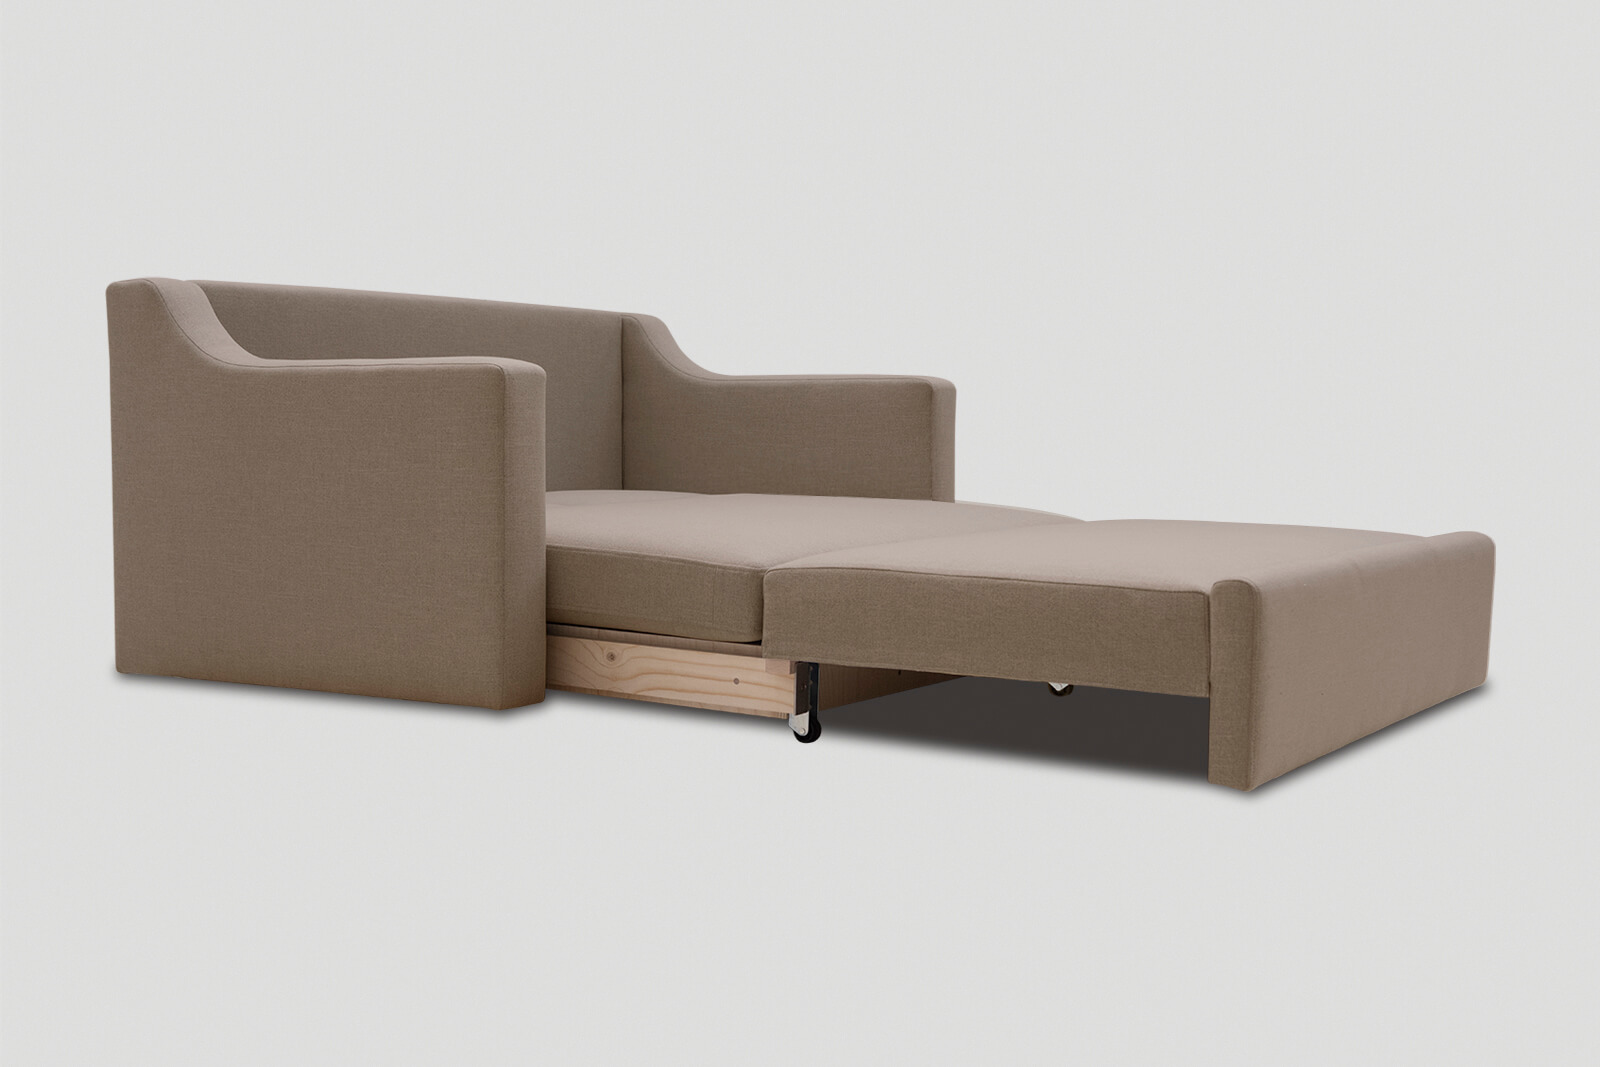 HBSB02-double-sofa-bed-husk-3q-bed